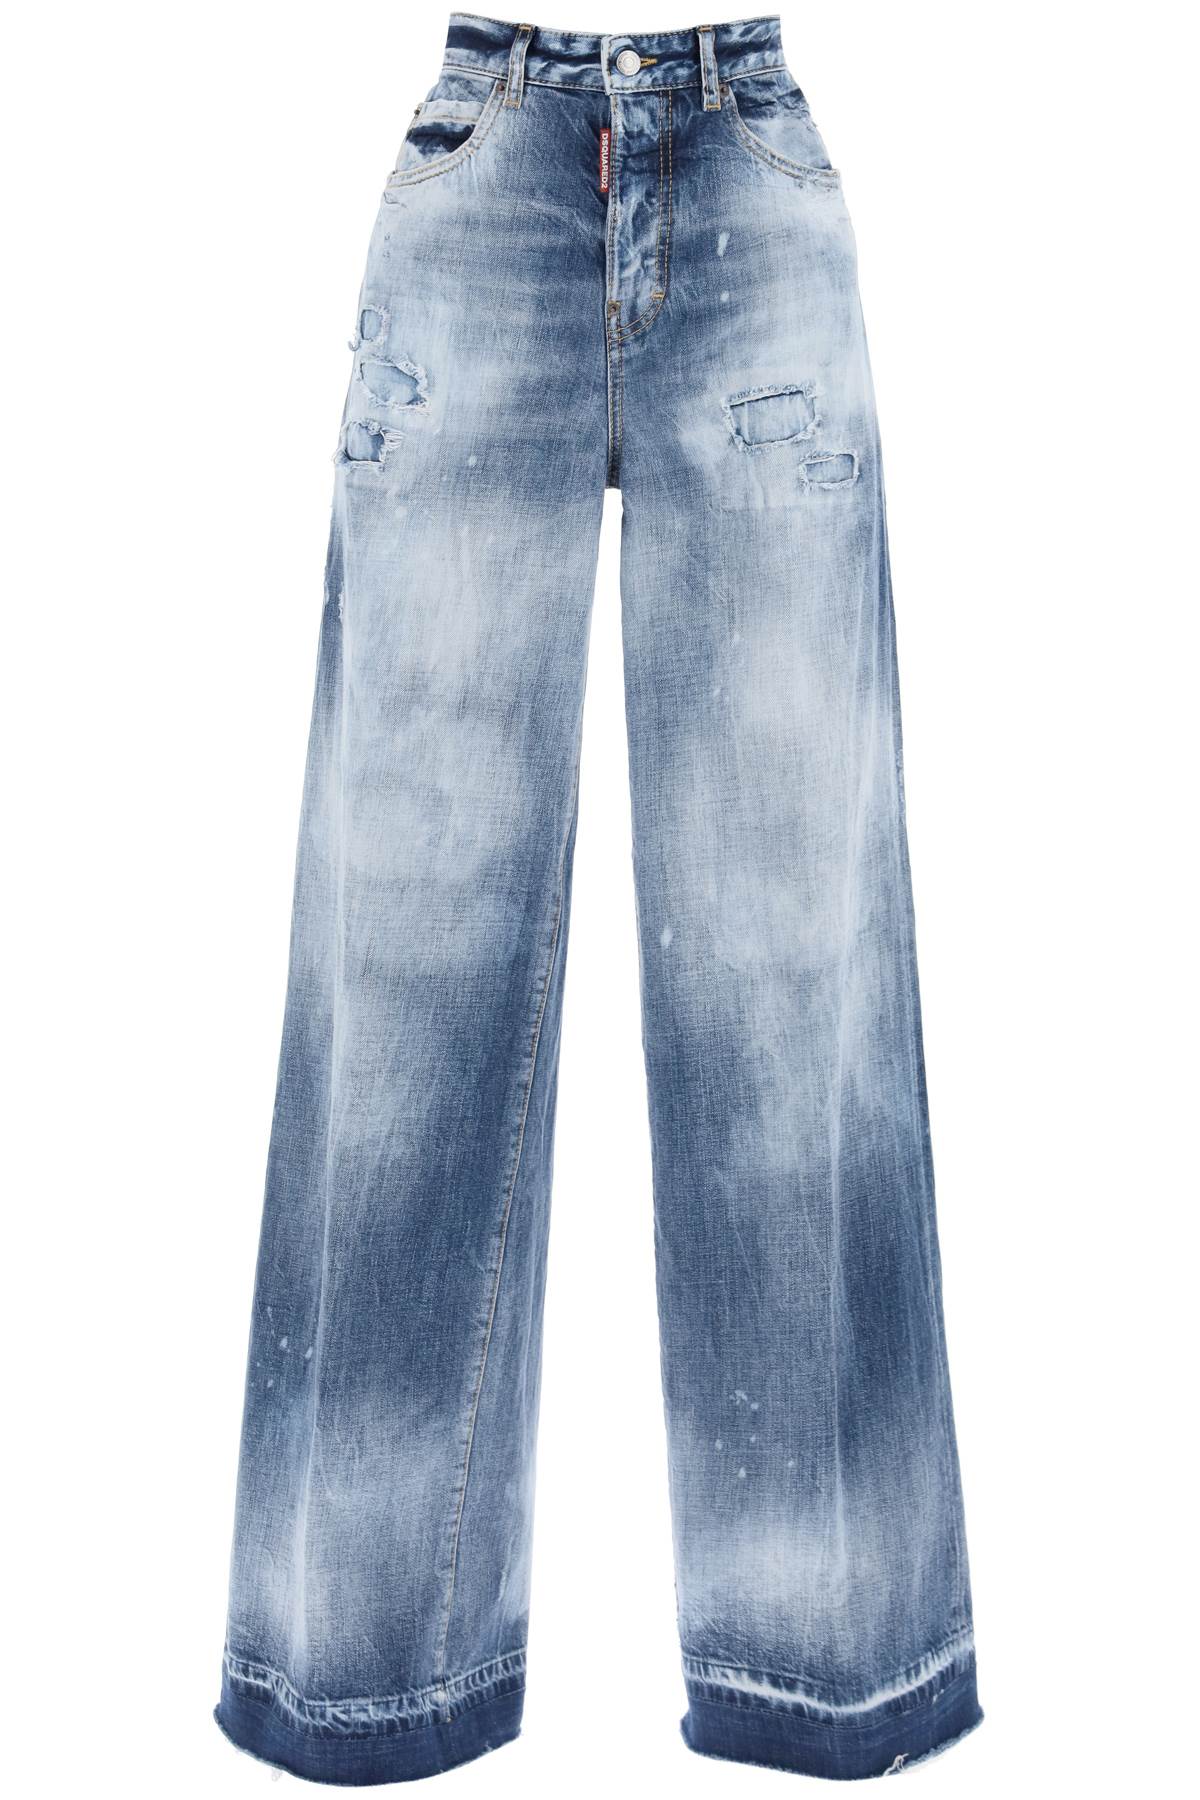 Dsquared2 traveller jeans in light everglades wash-0